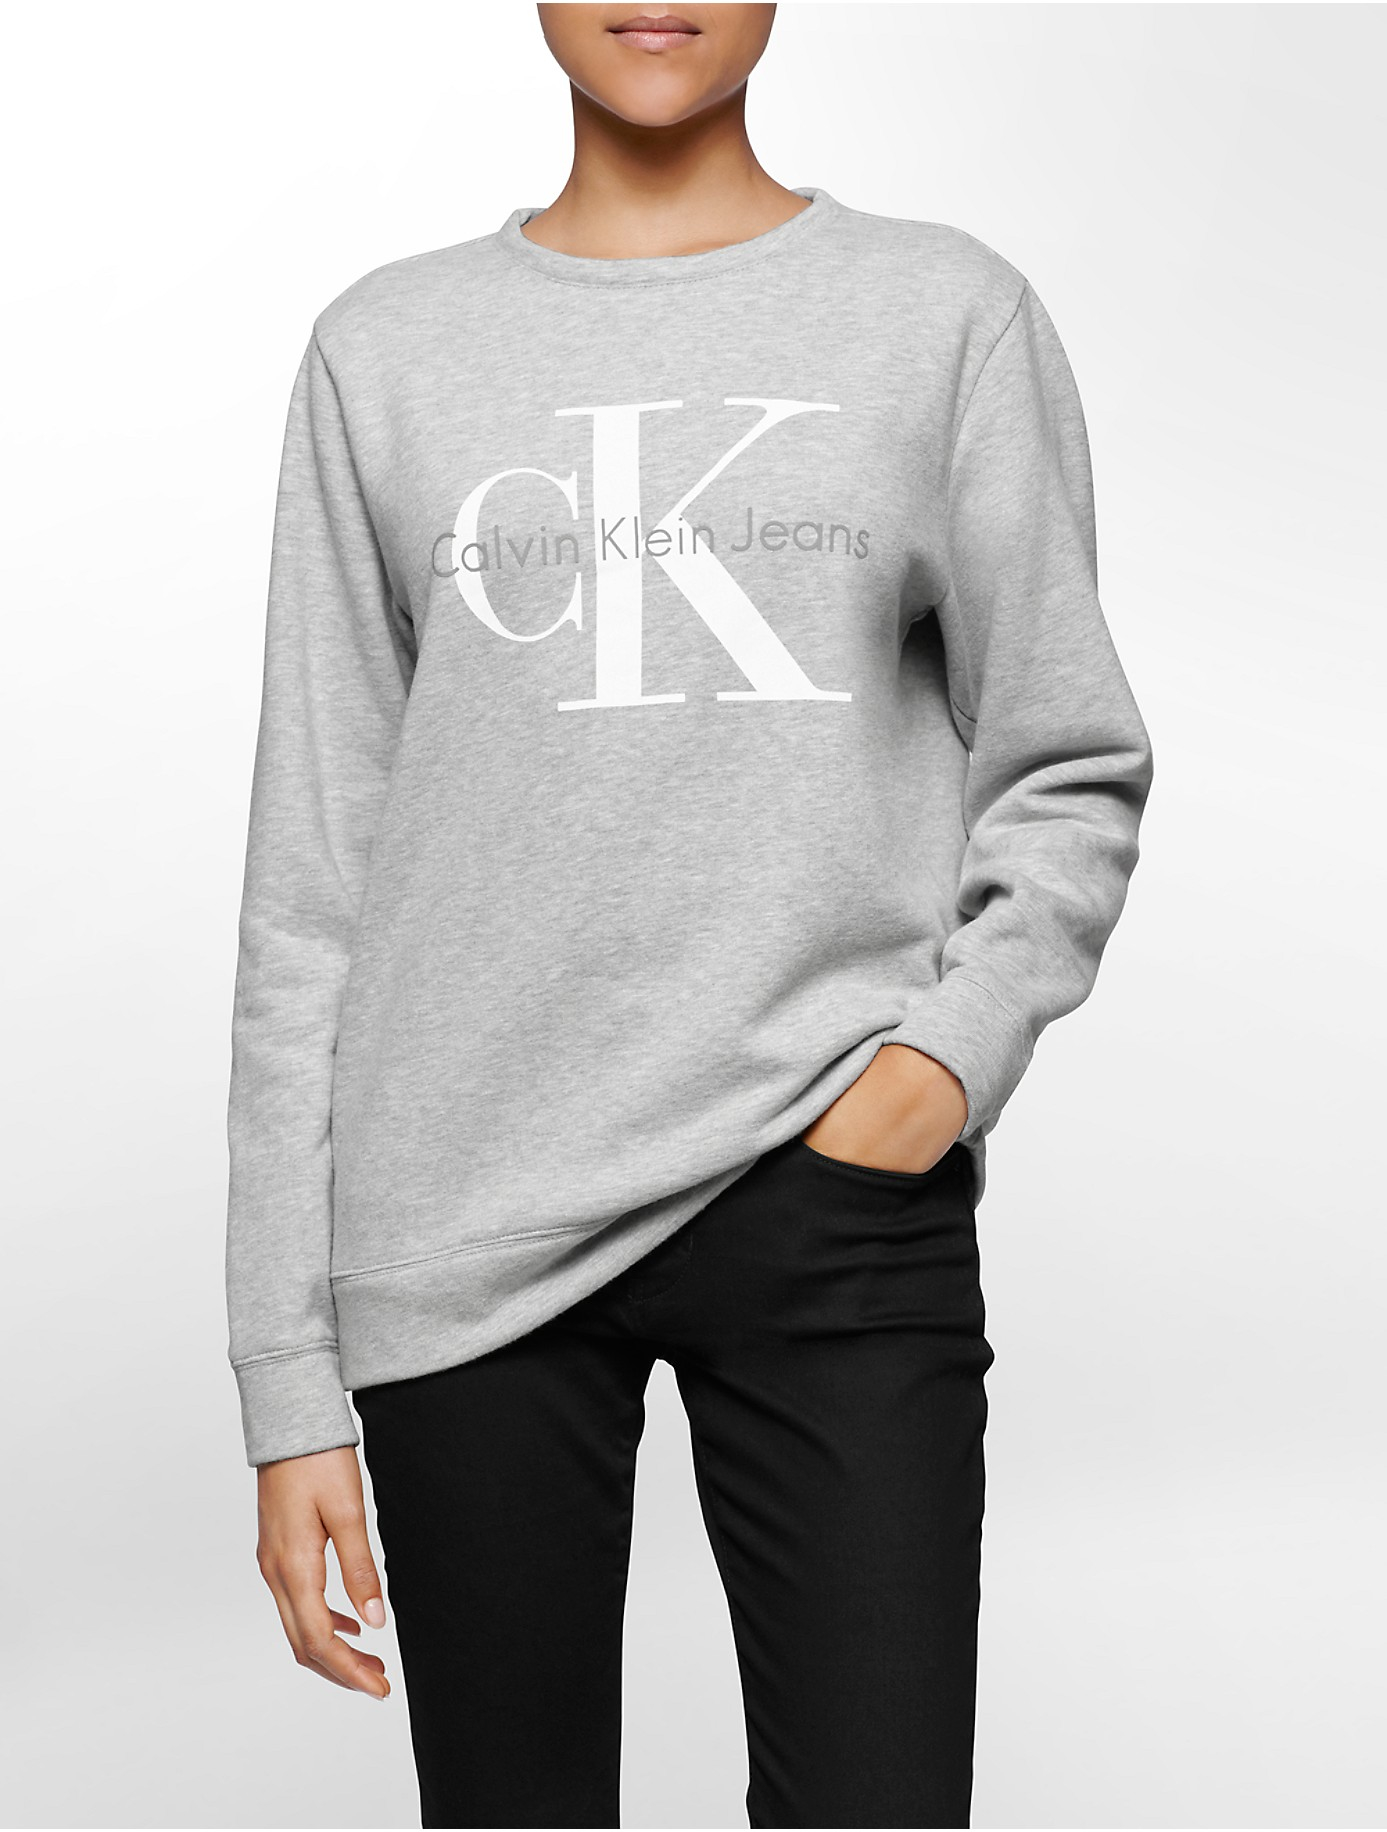 Calvin klein Jeans Vintage Logo Sweatshirt in Gray | Lyst